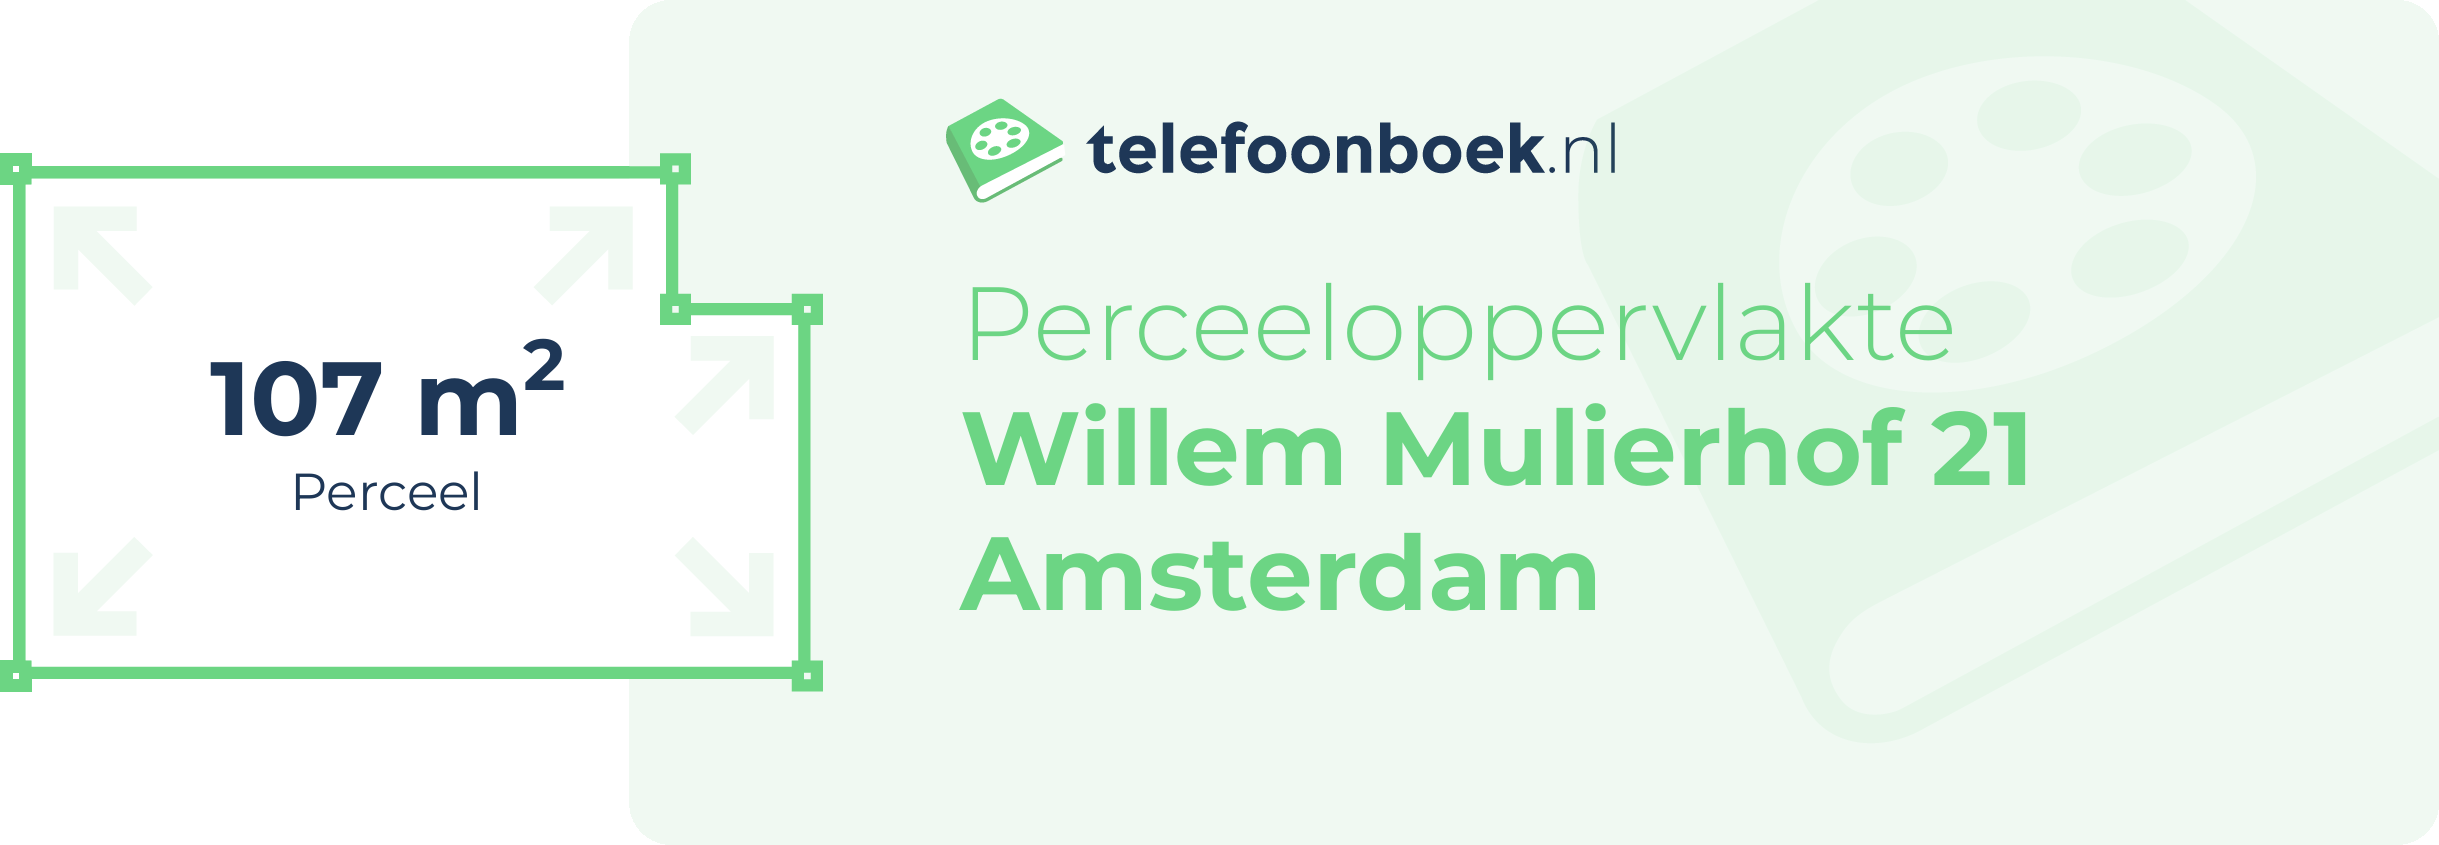 Perceeloppervlakte Willem Mulierhof 21 Amsterdam